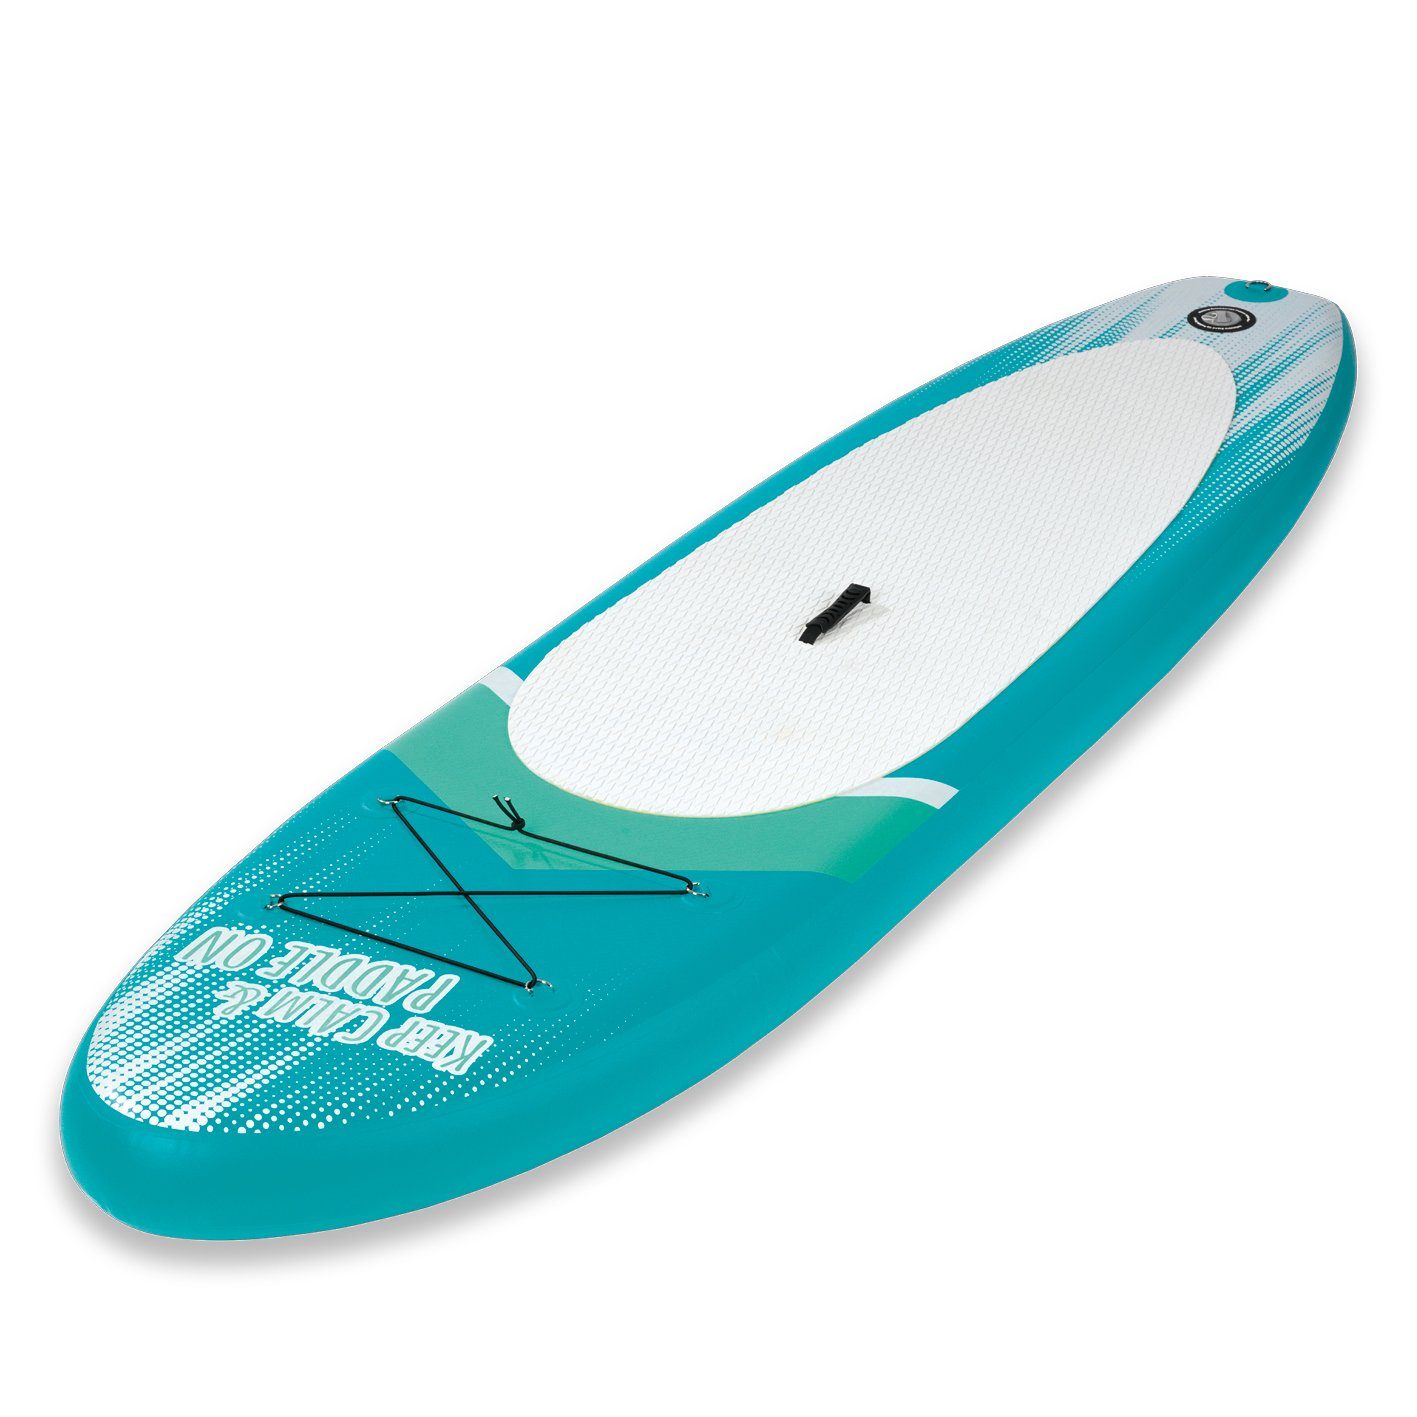 inkl. Inflatable Komplett up SUP kg, MAXXMEE türkis/weiß Board 110 Stand-Up 300 Paddel Paddle-Board cm, Zubehör, SUP-Board Set Stand Paddling